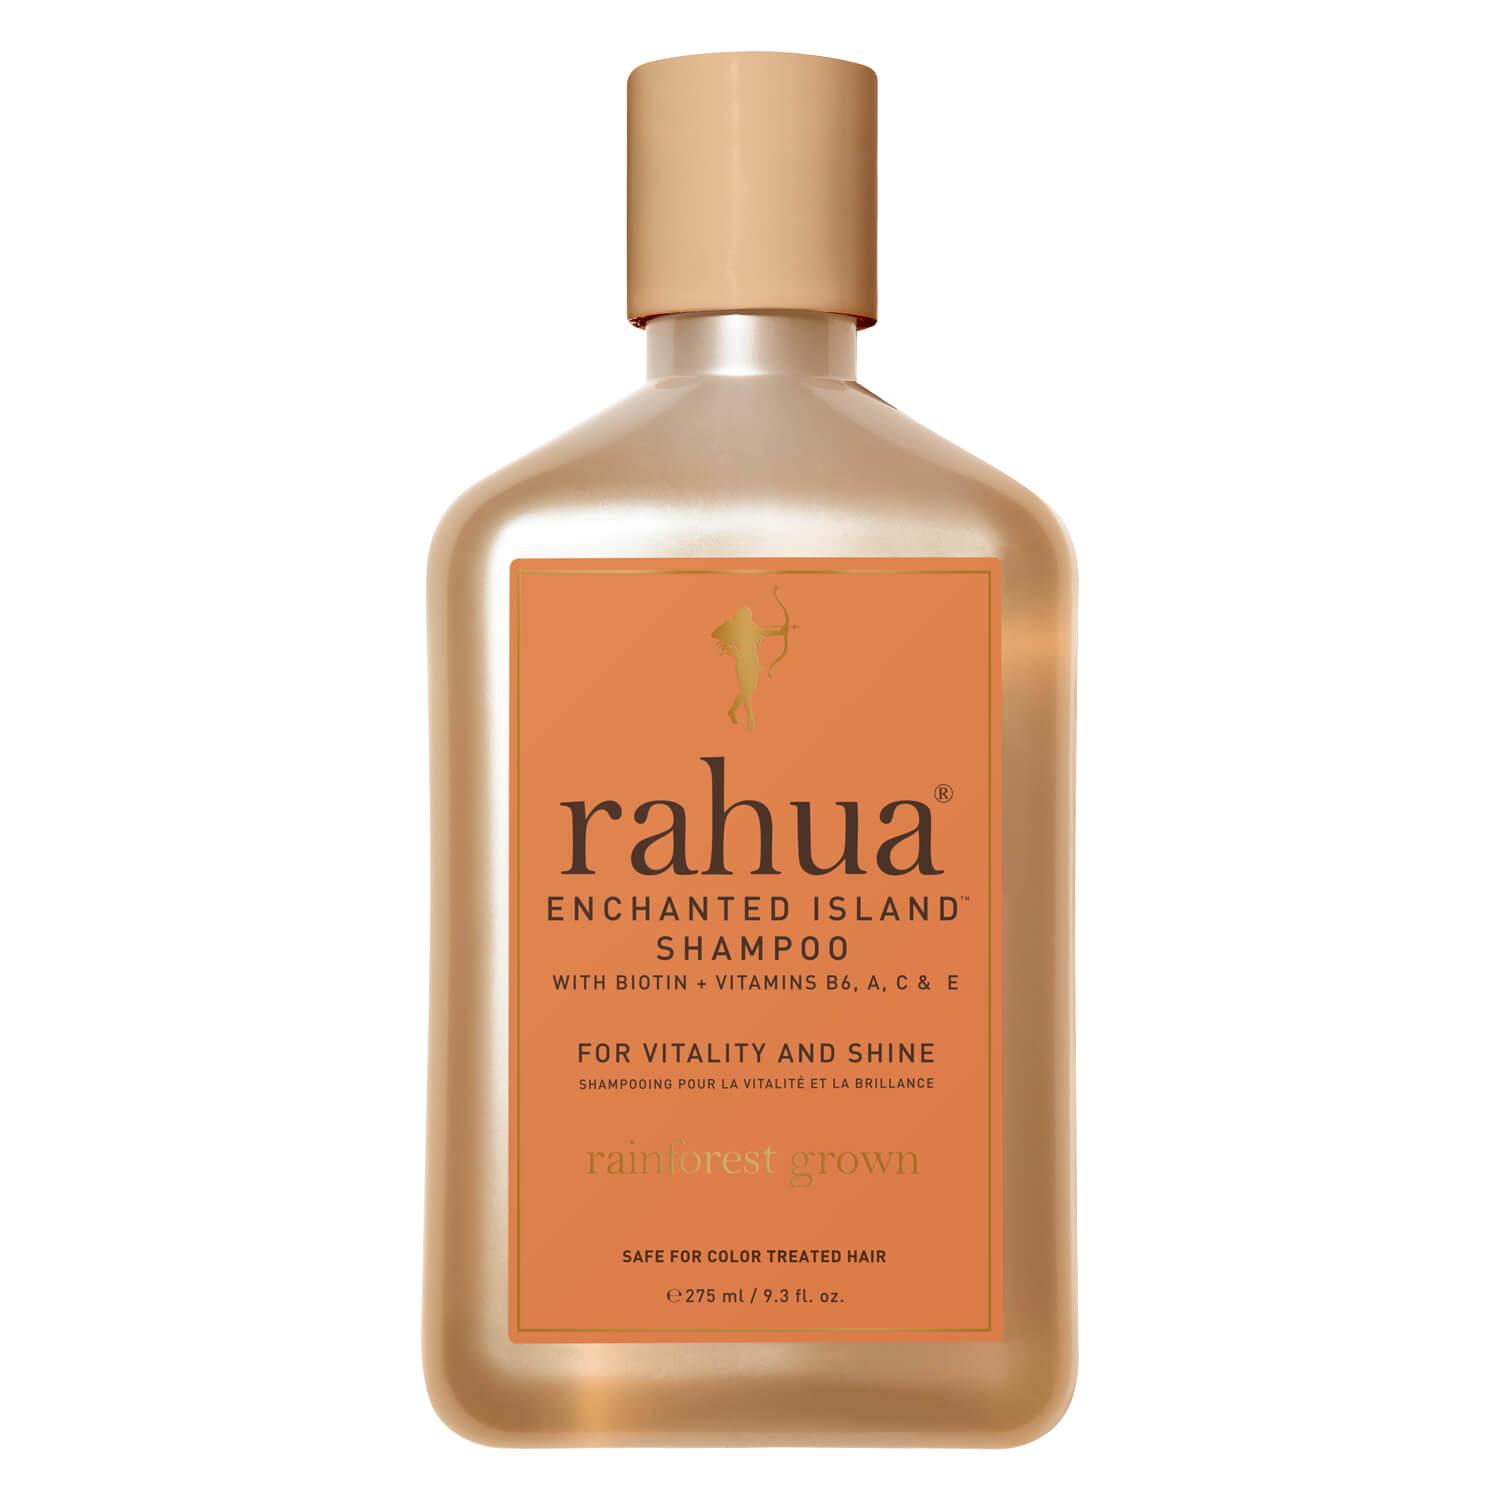 Rahua Daily Care Enchanted Island Shampoo